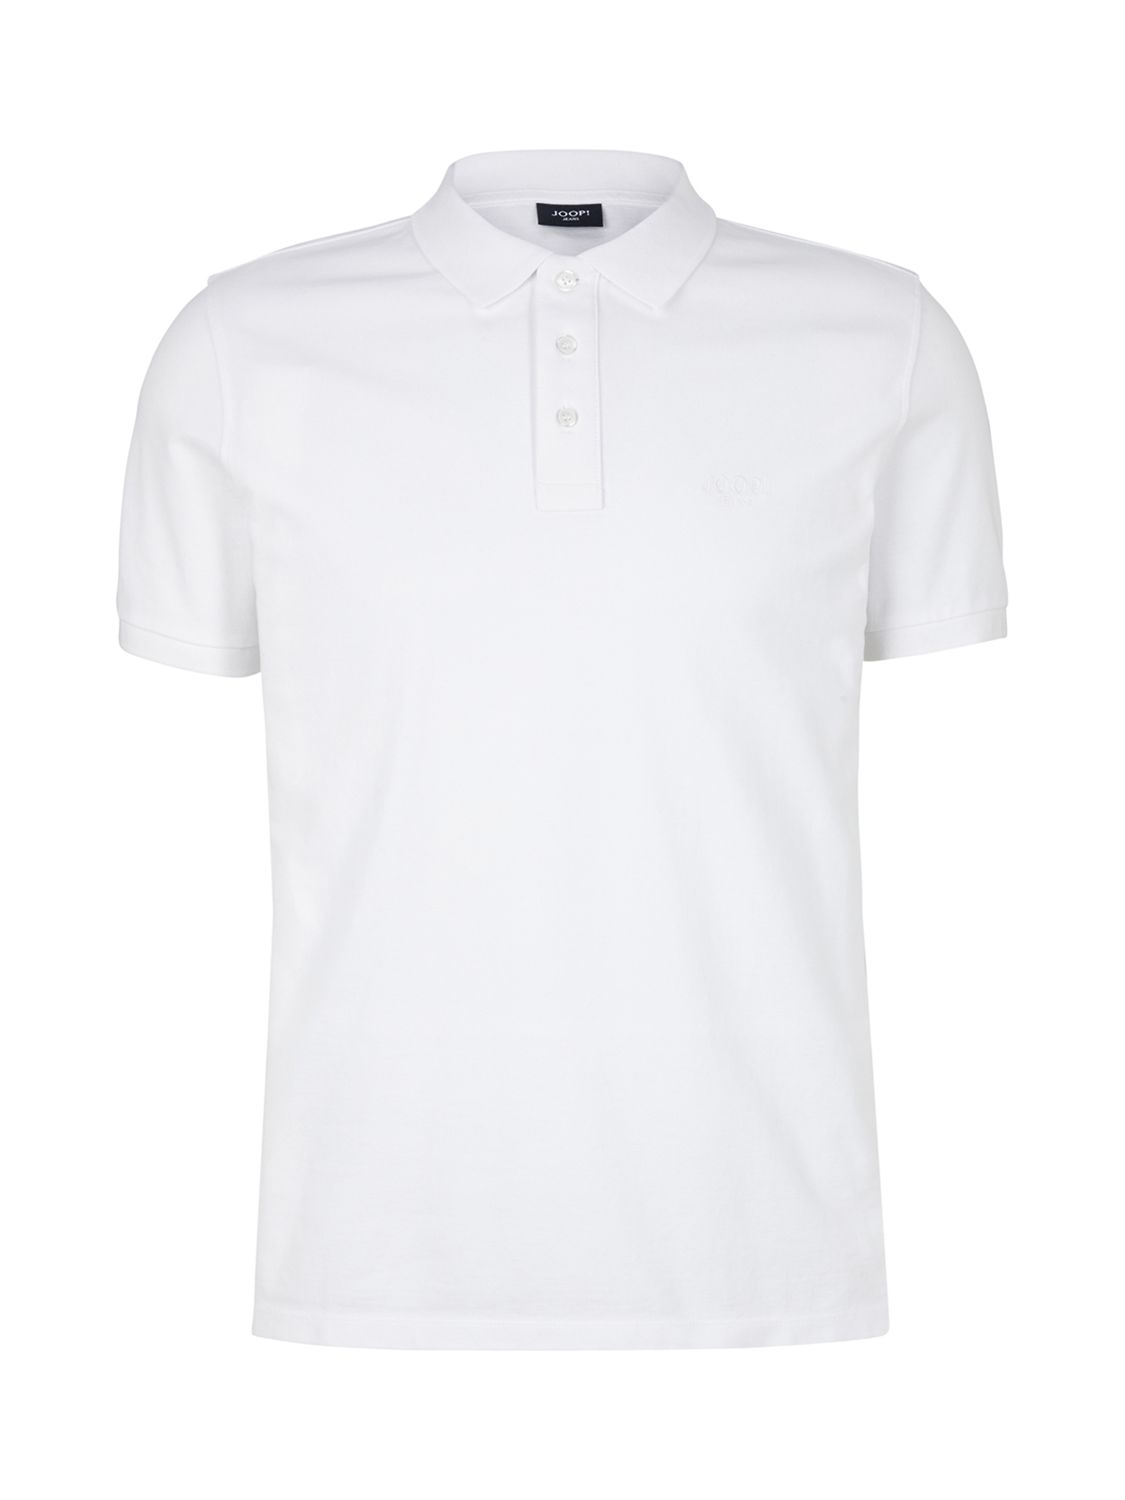 JOOP! Ambrosio Short Sleeve Polo Shirt, White at John Lewis & Partners